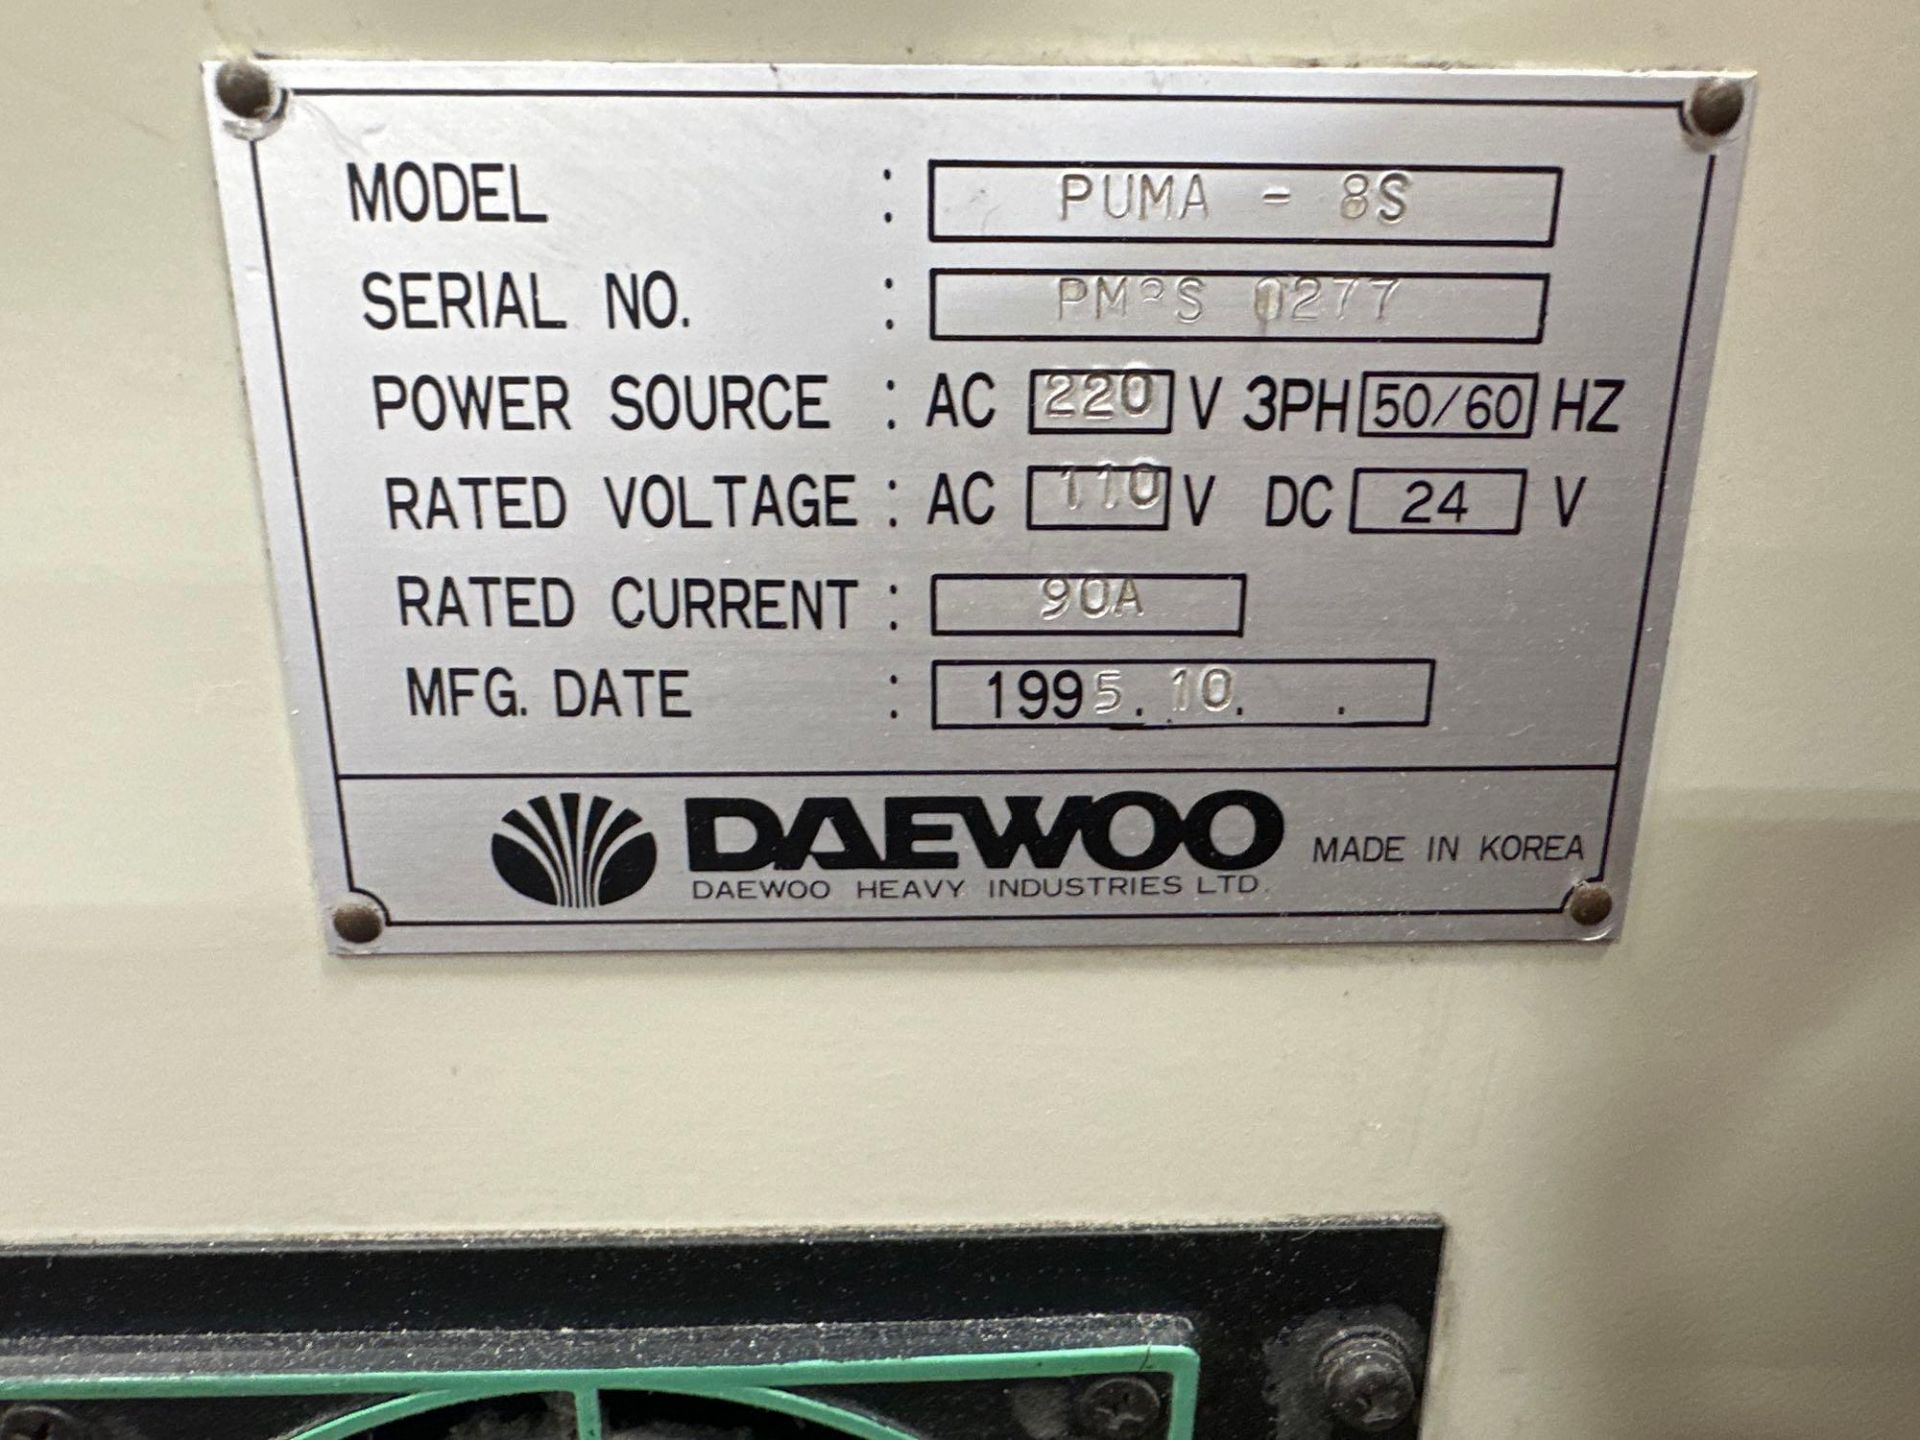 Daewoo Puma 8S CNC Lathe, Fanuc 0-T Control, 8"Kitagawa 3-Chuck, Tool Presetter, s/n PM8S-0277, 1995 - Image 10 of 10